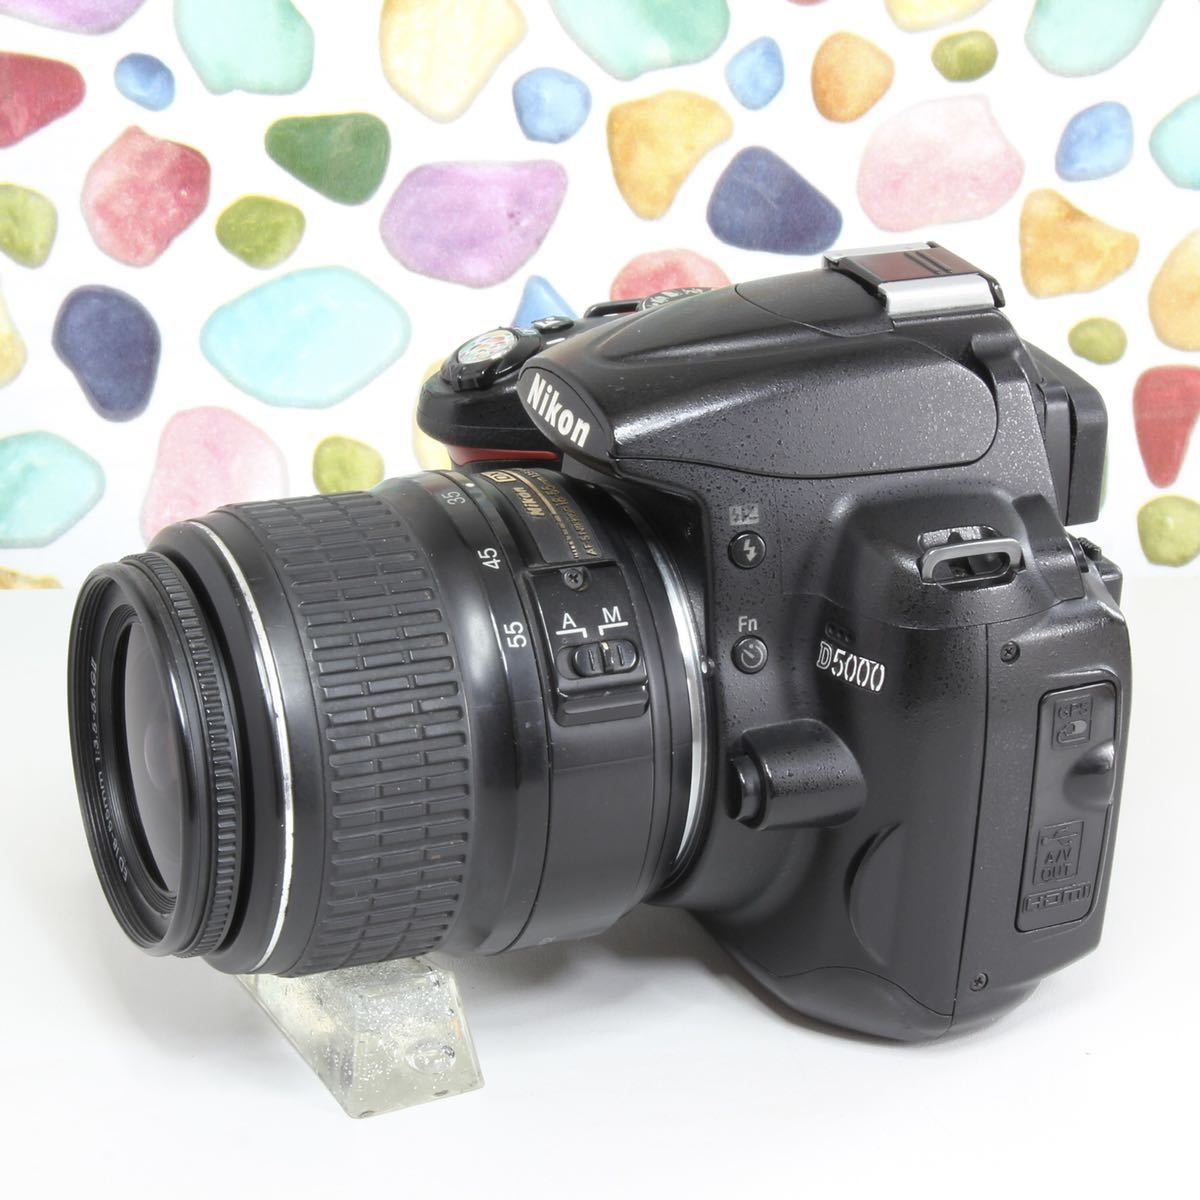 Nikon D5300☆スマホに転送できるWiFi機能つき一眼レフ☆3463